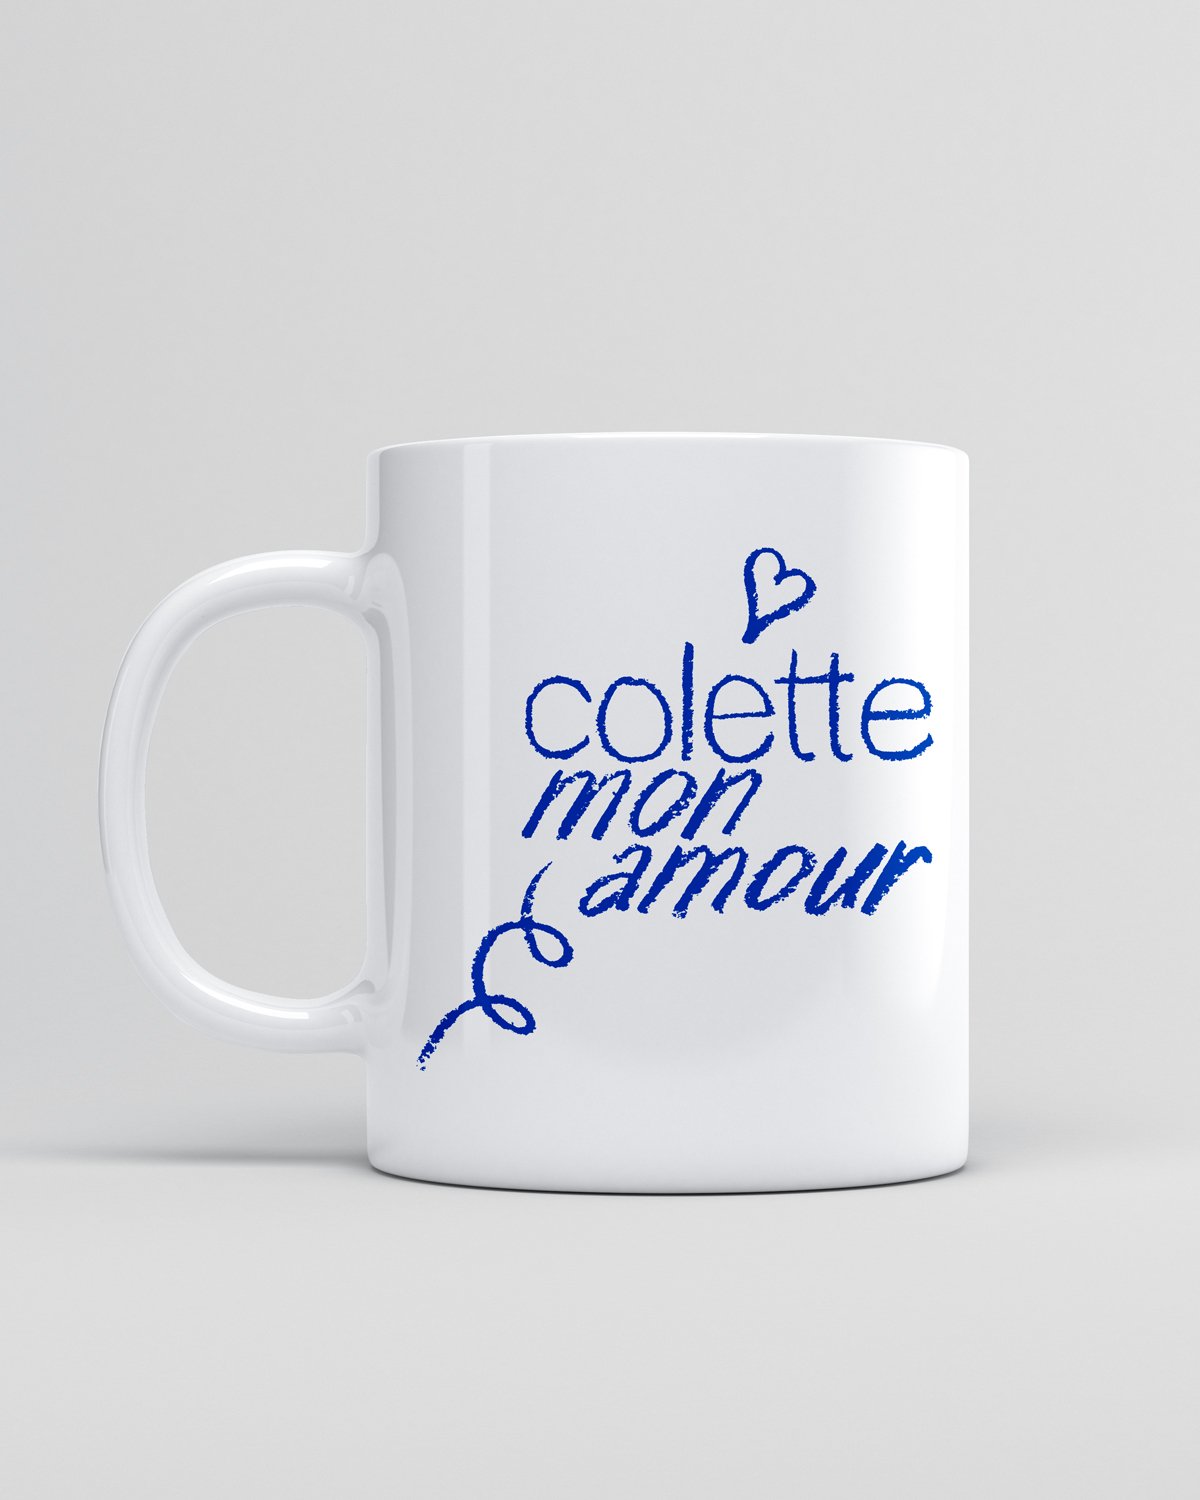 Colette Mon Amour - White Mug - Mugs - White - Image 1